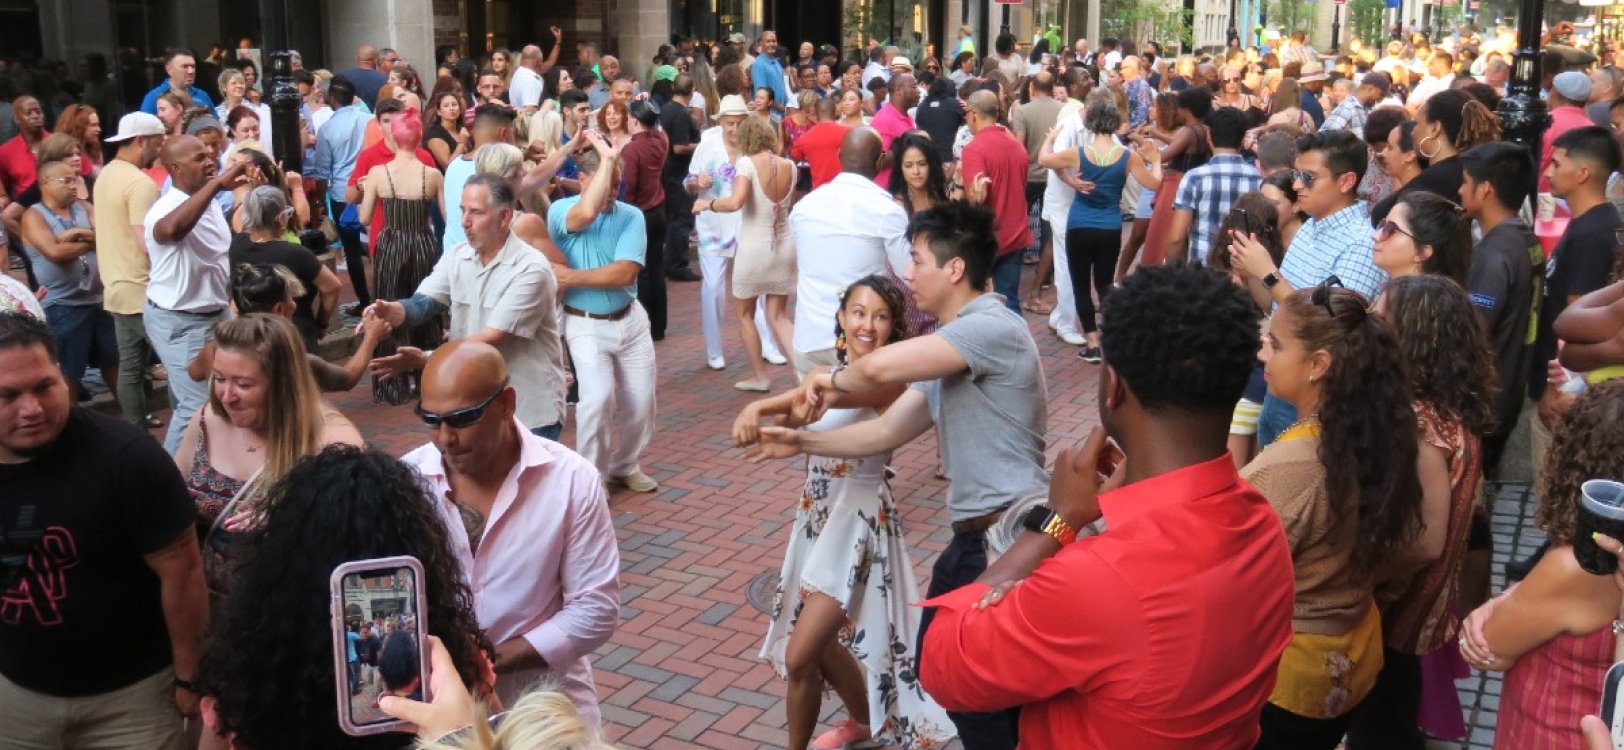 A crowd of people dance on the Pratt Street Patio at Salsa Socials Night